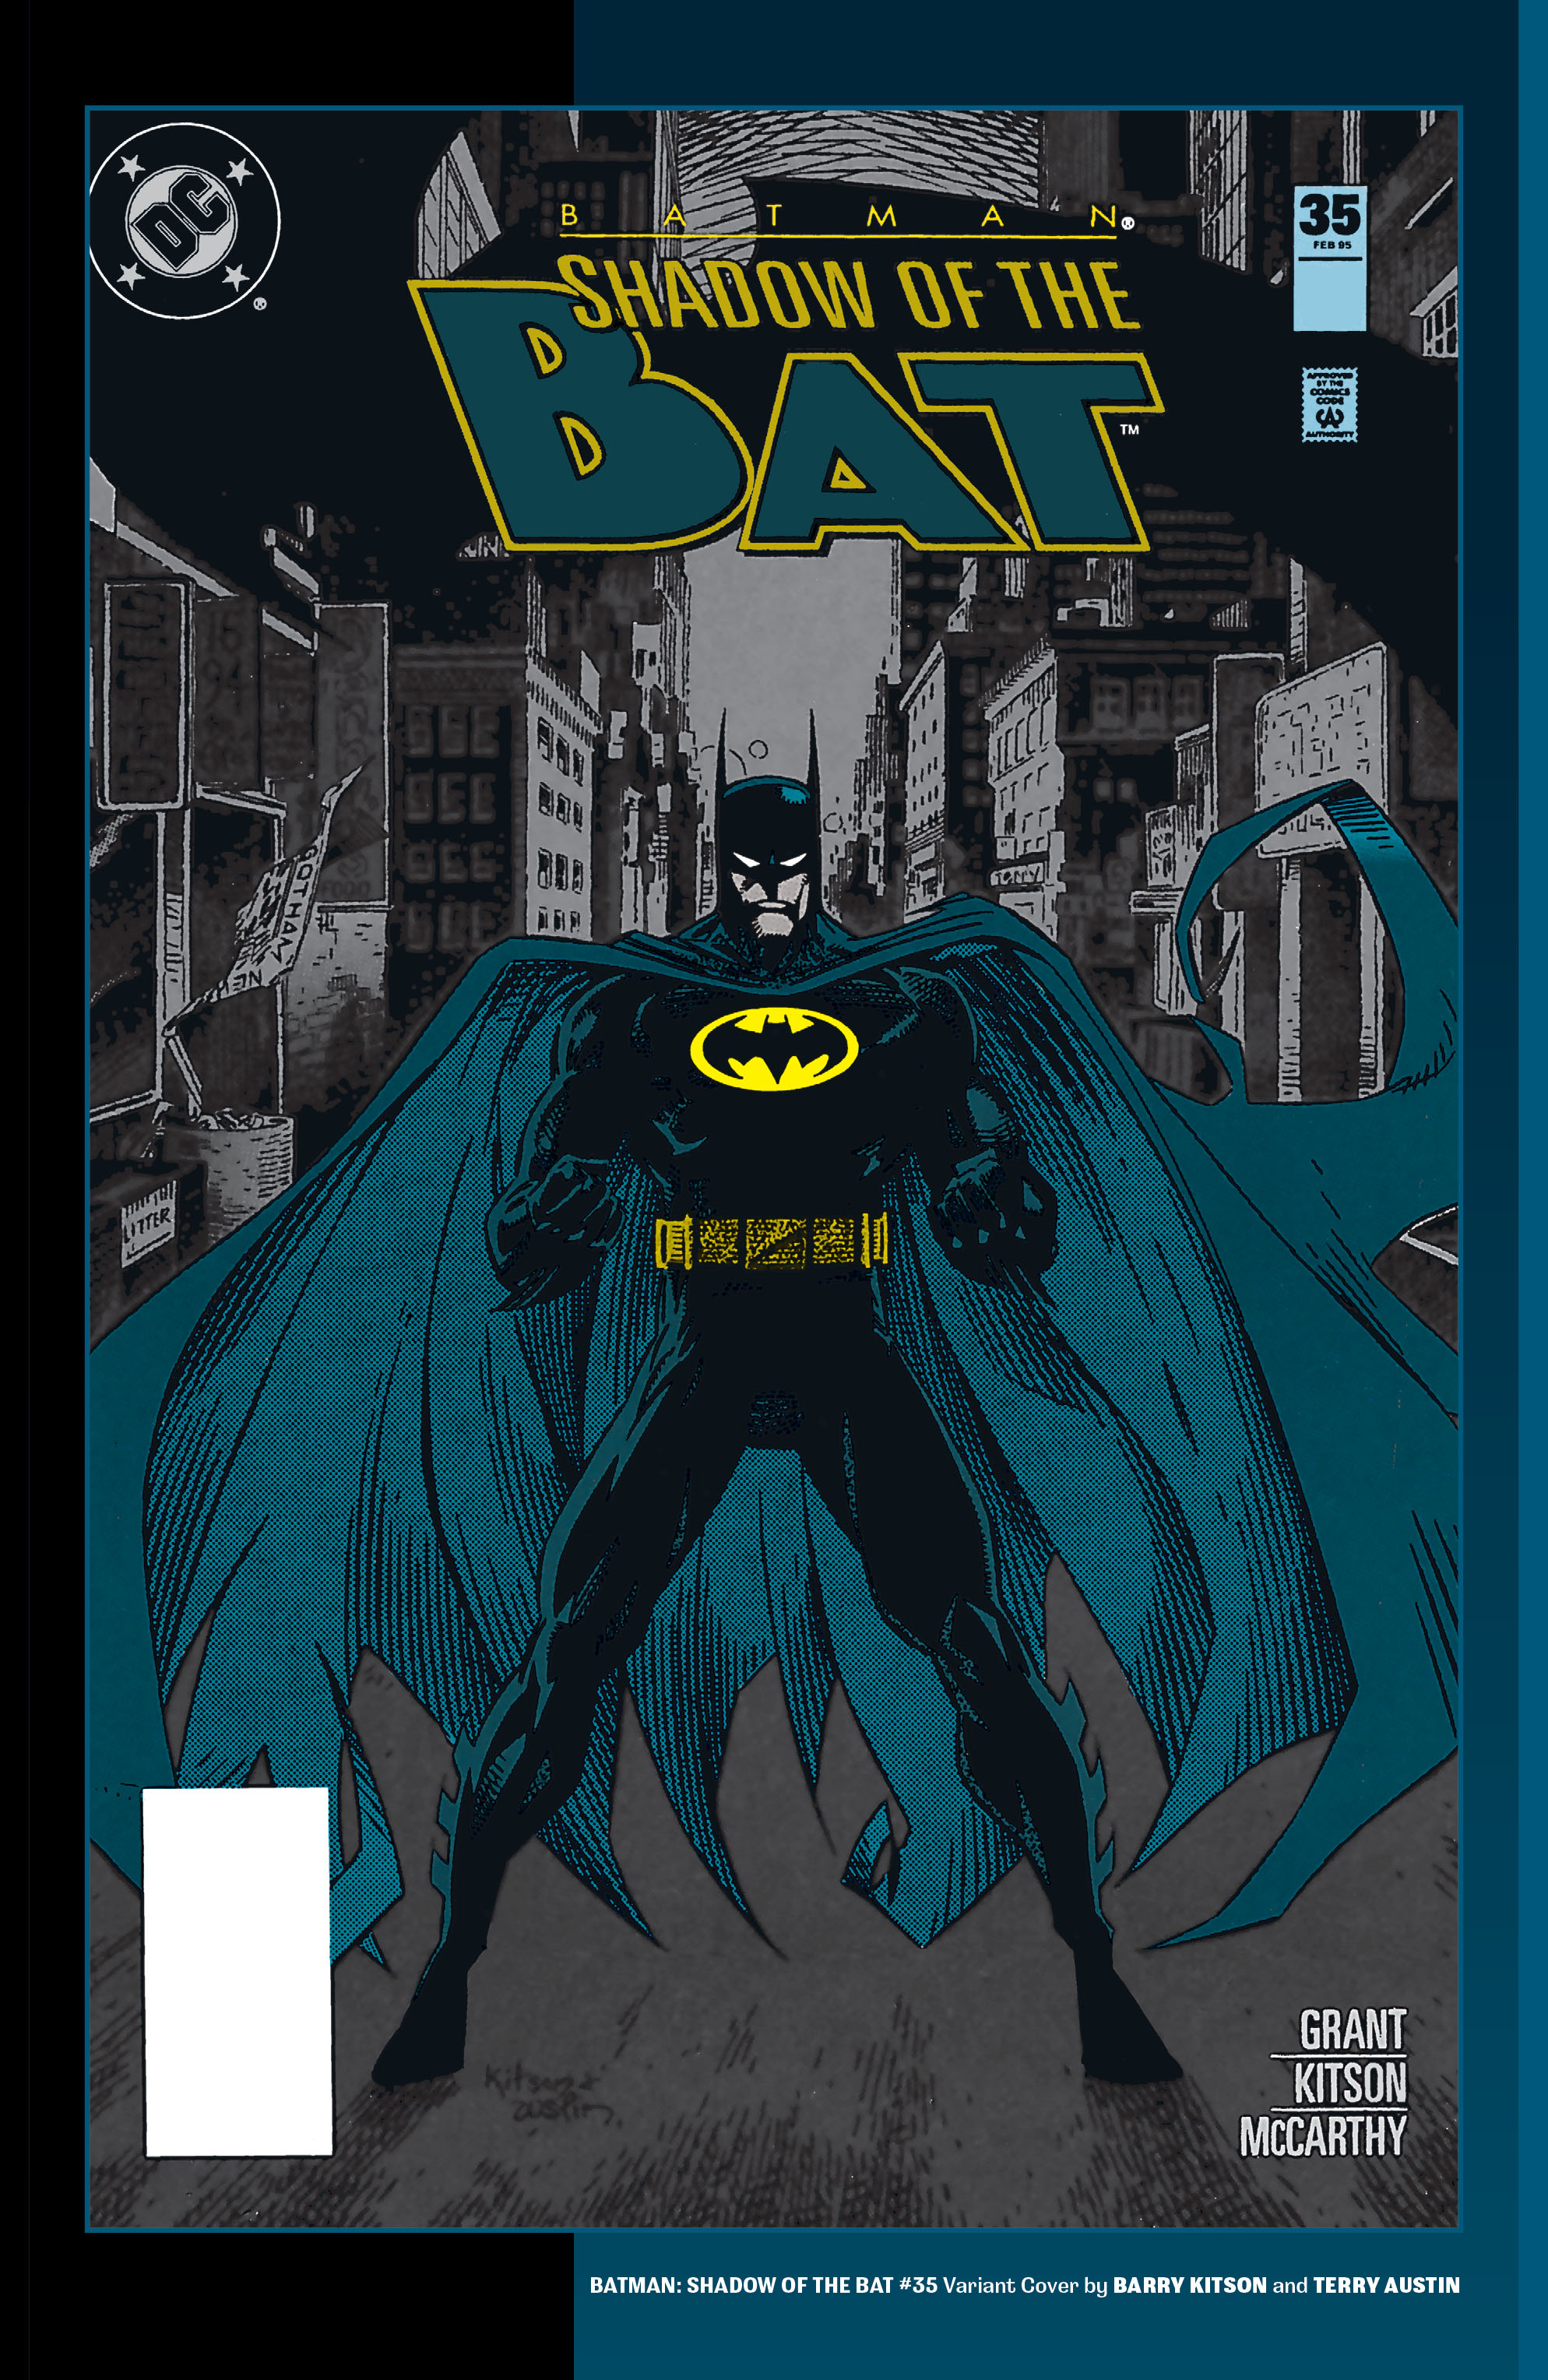 Бэтмен на английском. Batman in English описание героя. Найти Бэтмен 1992 комикс футболки. Имя Бэтмена на английском. Бэтмен на английском языке